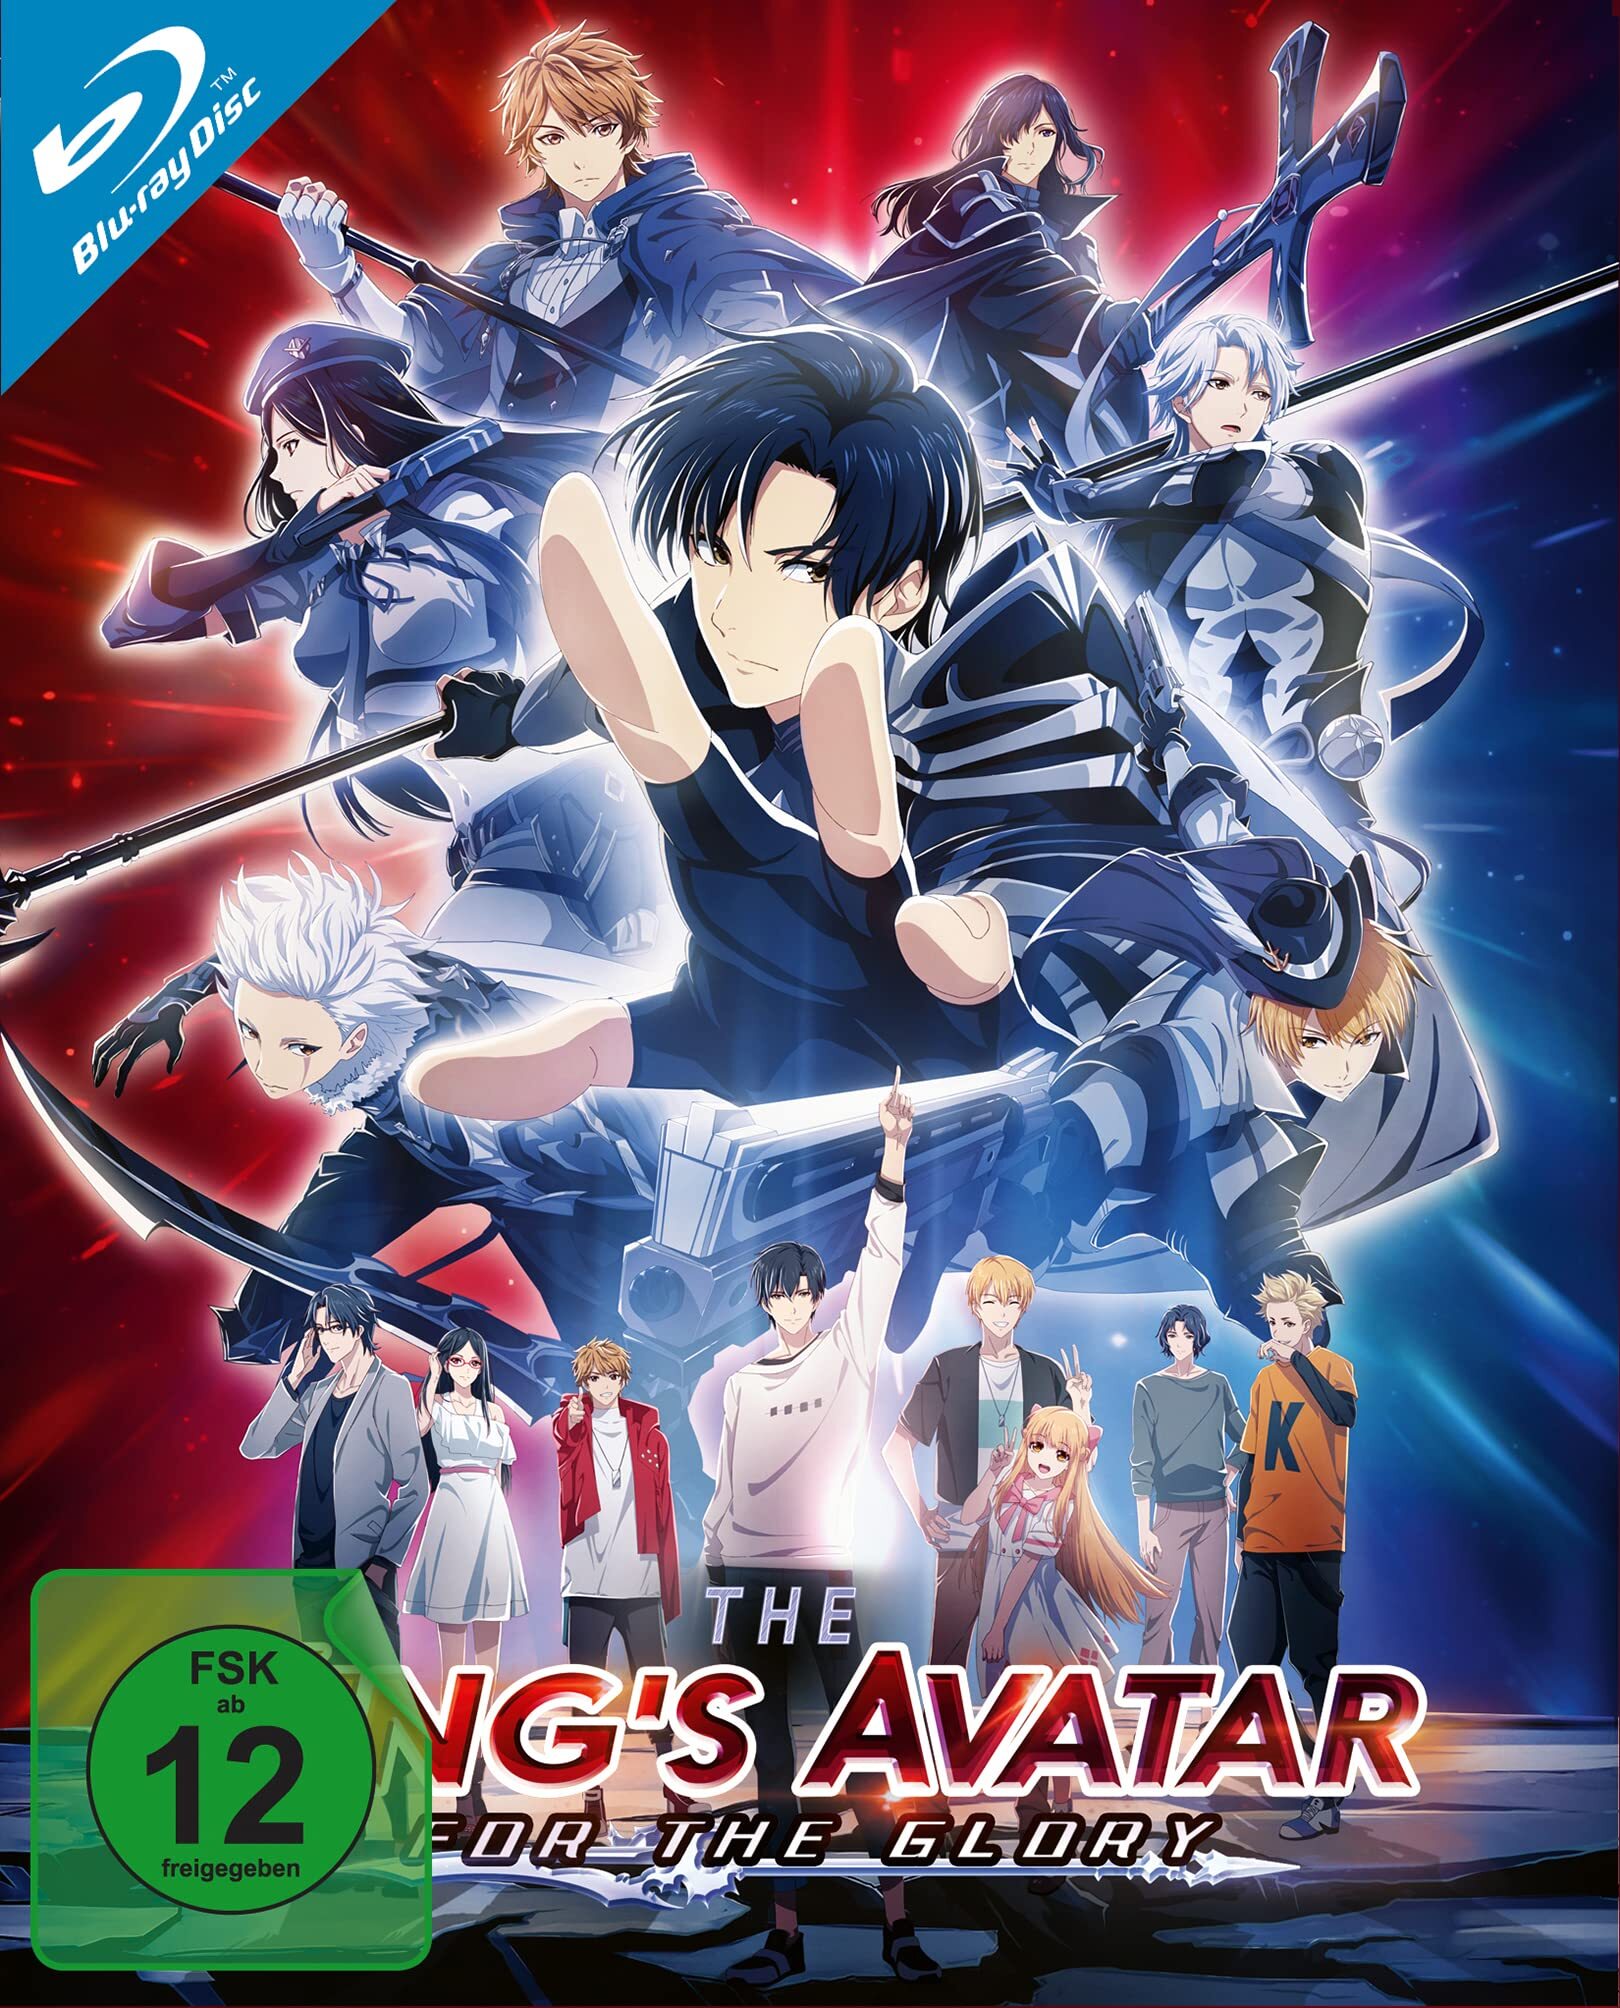 The King's Avatar: For the Glory Blu-ray (Quan zhi gao shou zhi dian feng  rong yao / 全职高手之巅峰荣耀) (Germany)